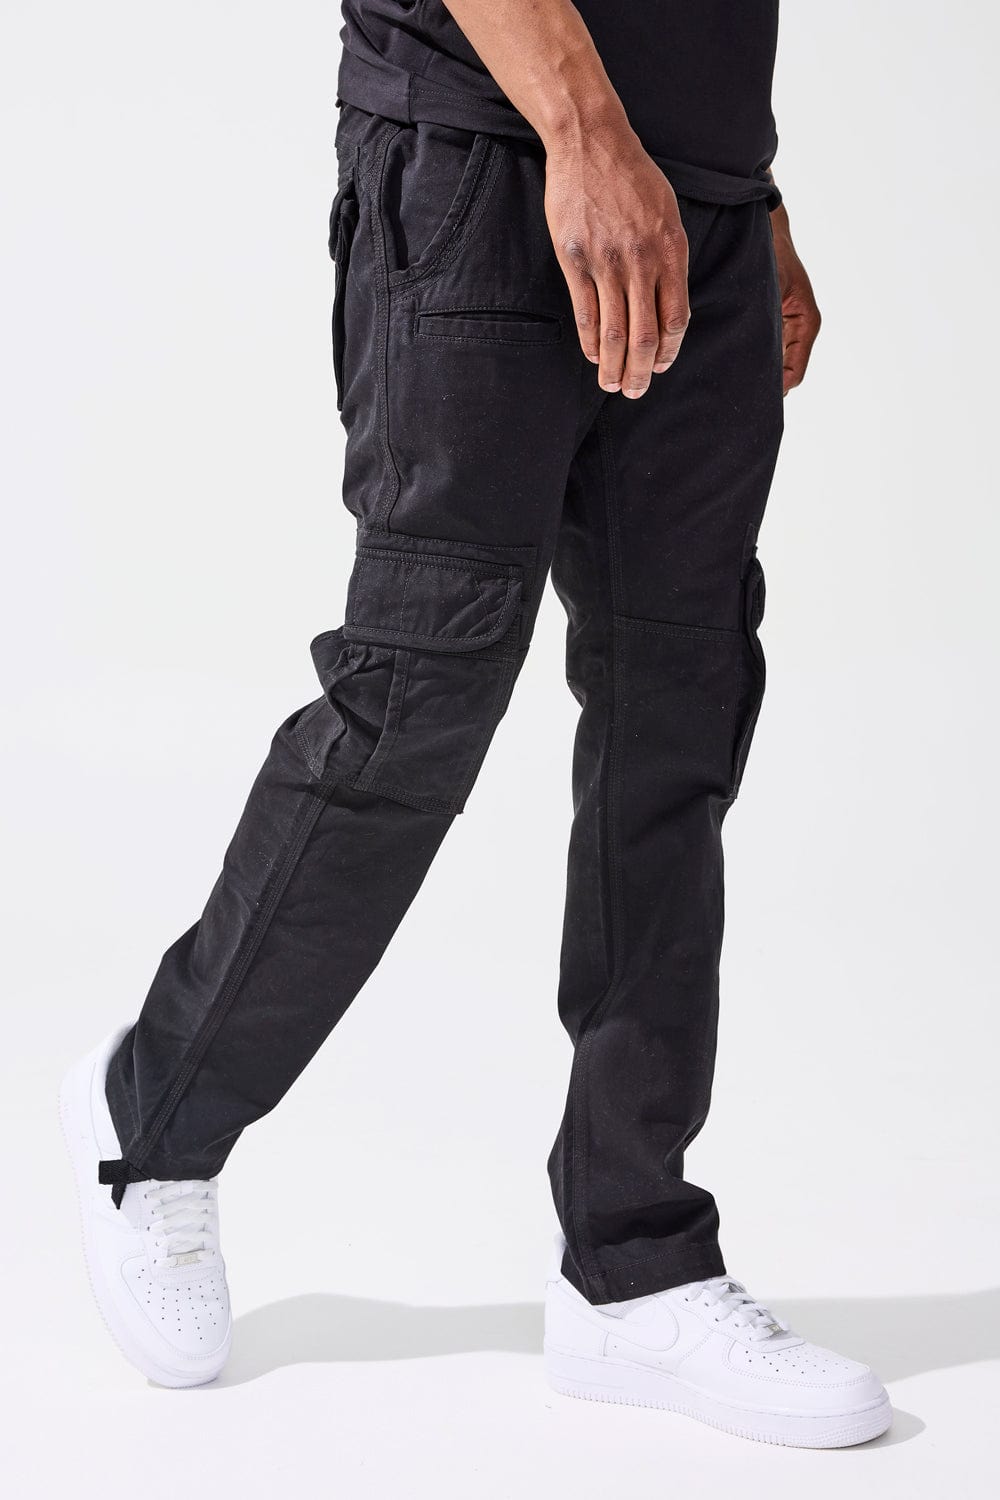 Xavier - OG Cargo Pants (Black) - 44/34 - Jordan Craig